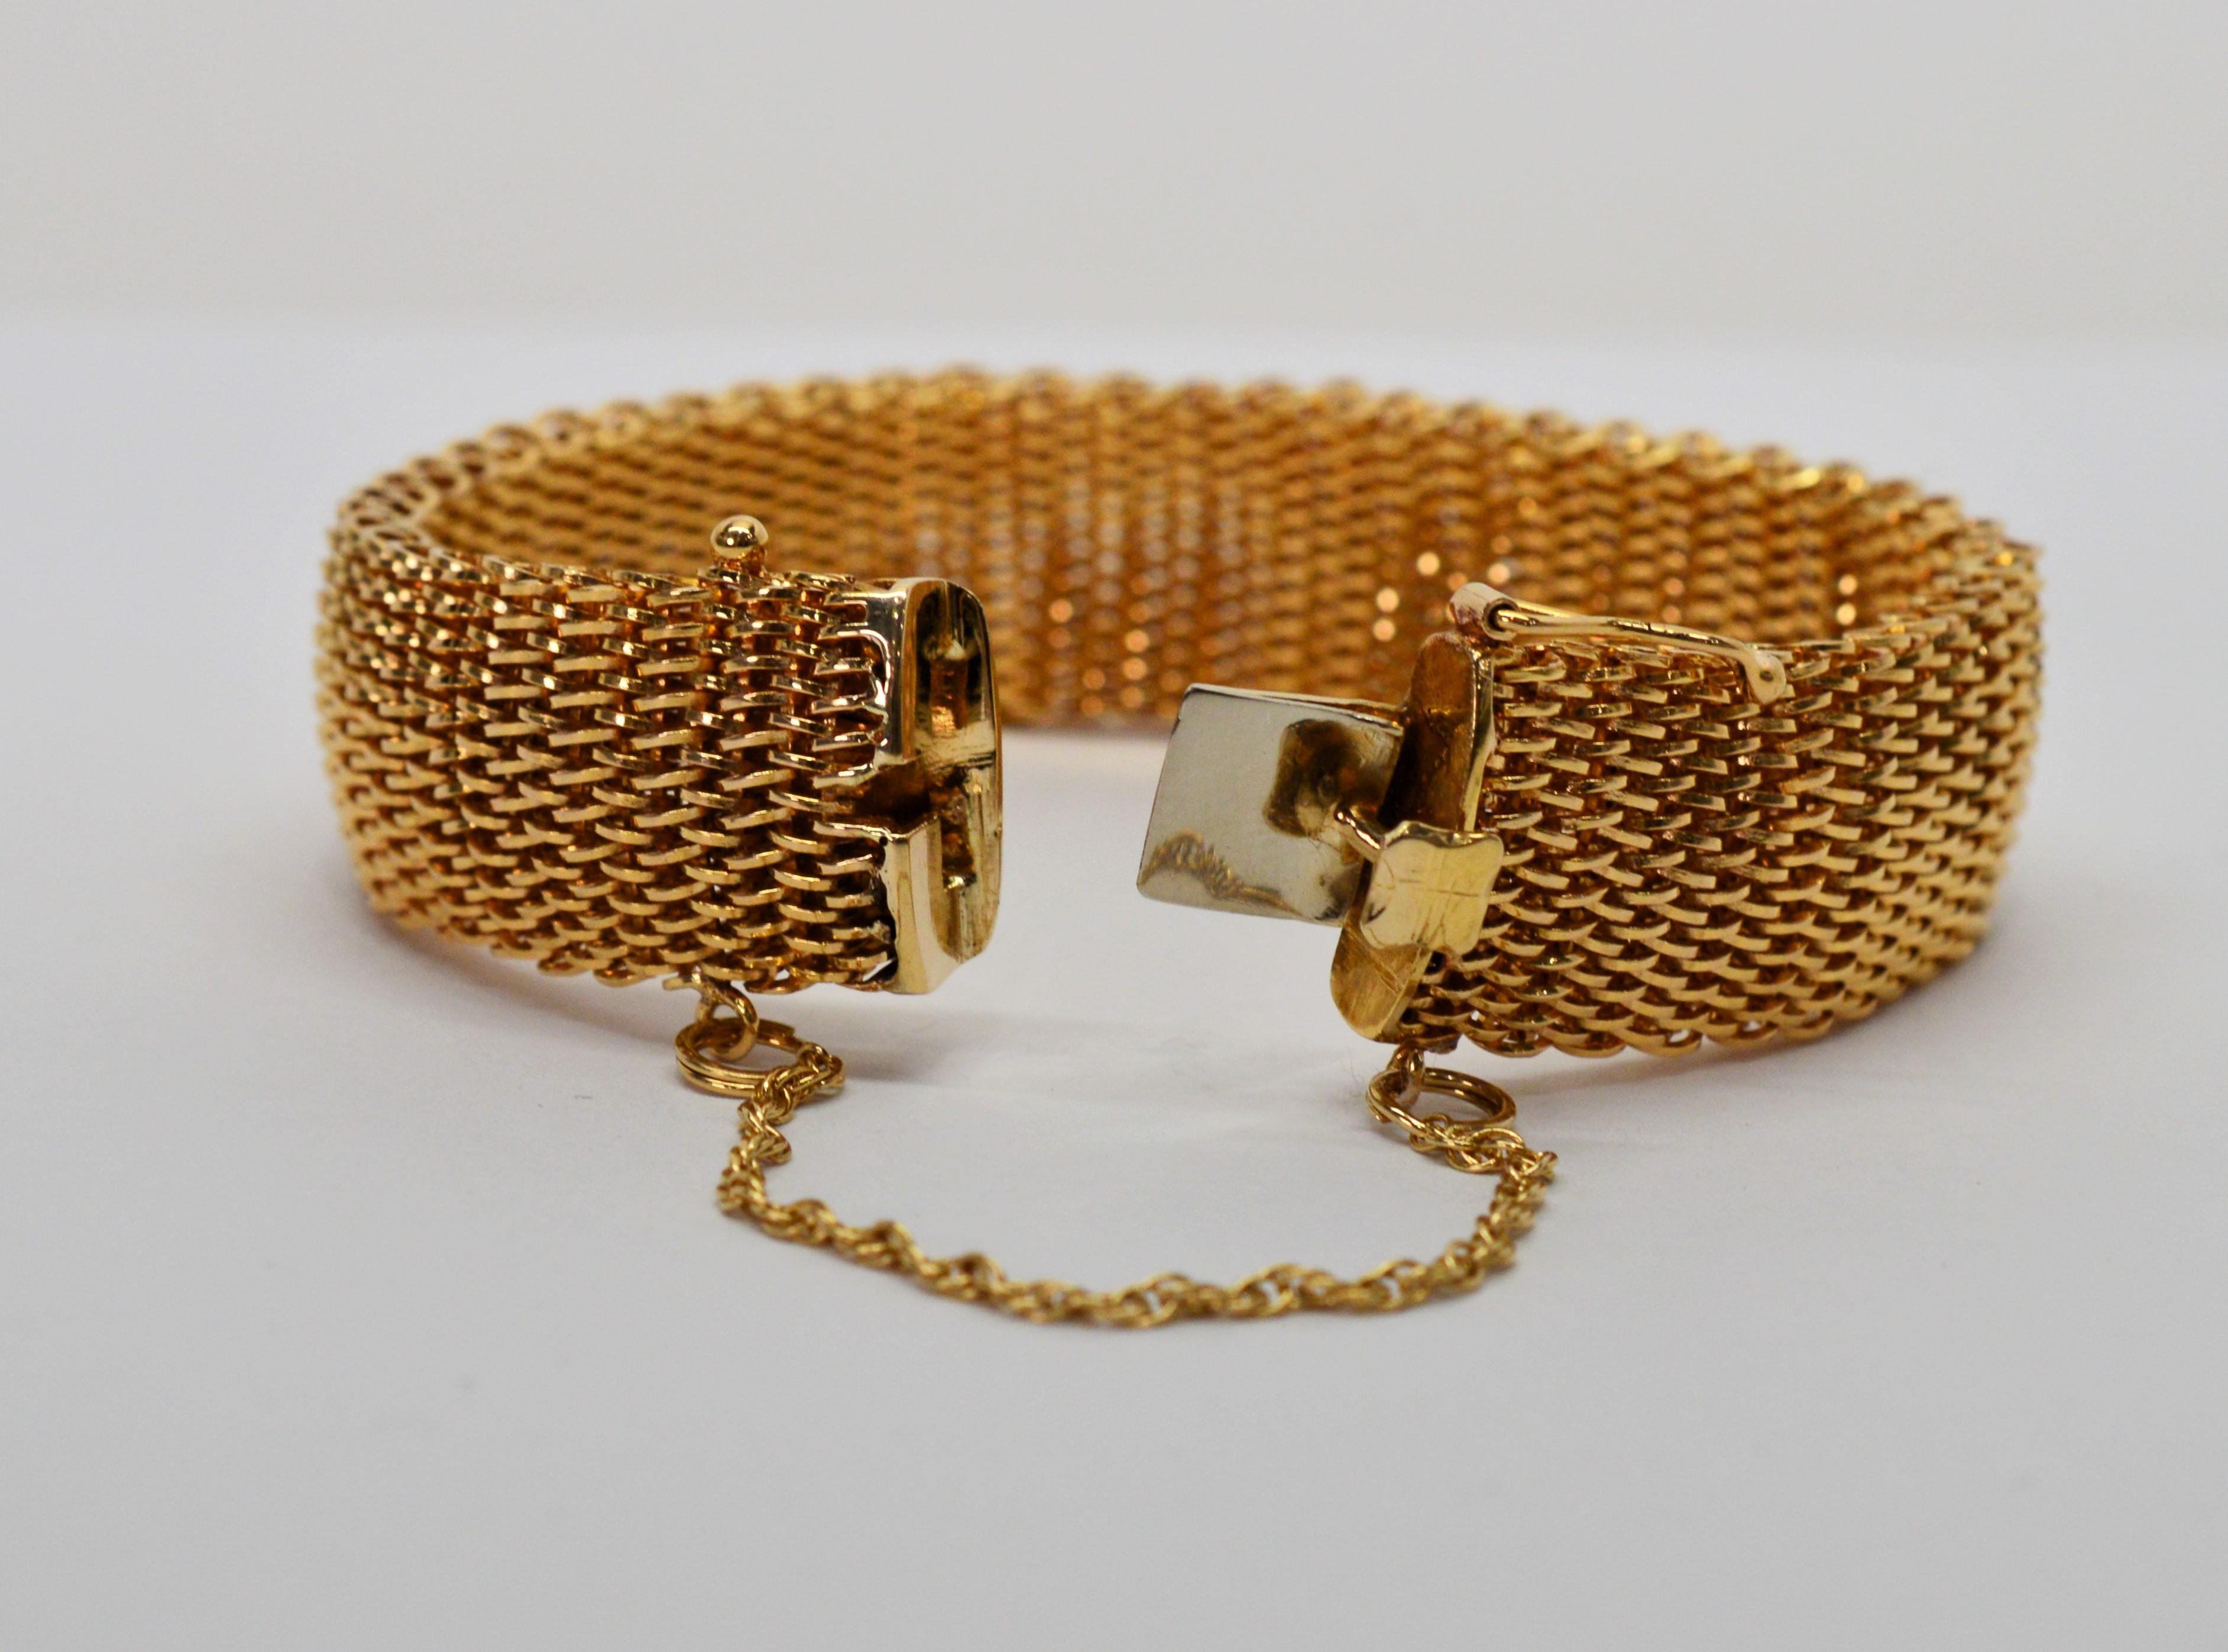  18 Karat Yellow Gold Sleek Mesh Statement Bracelet In Excellent Condition For Sale In Mount Kisco, NY